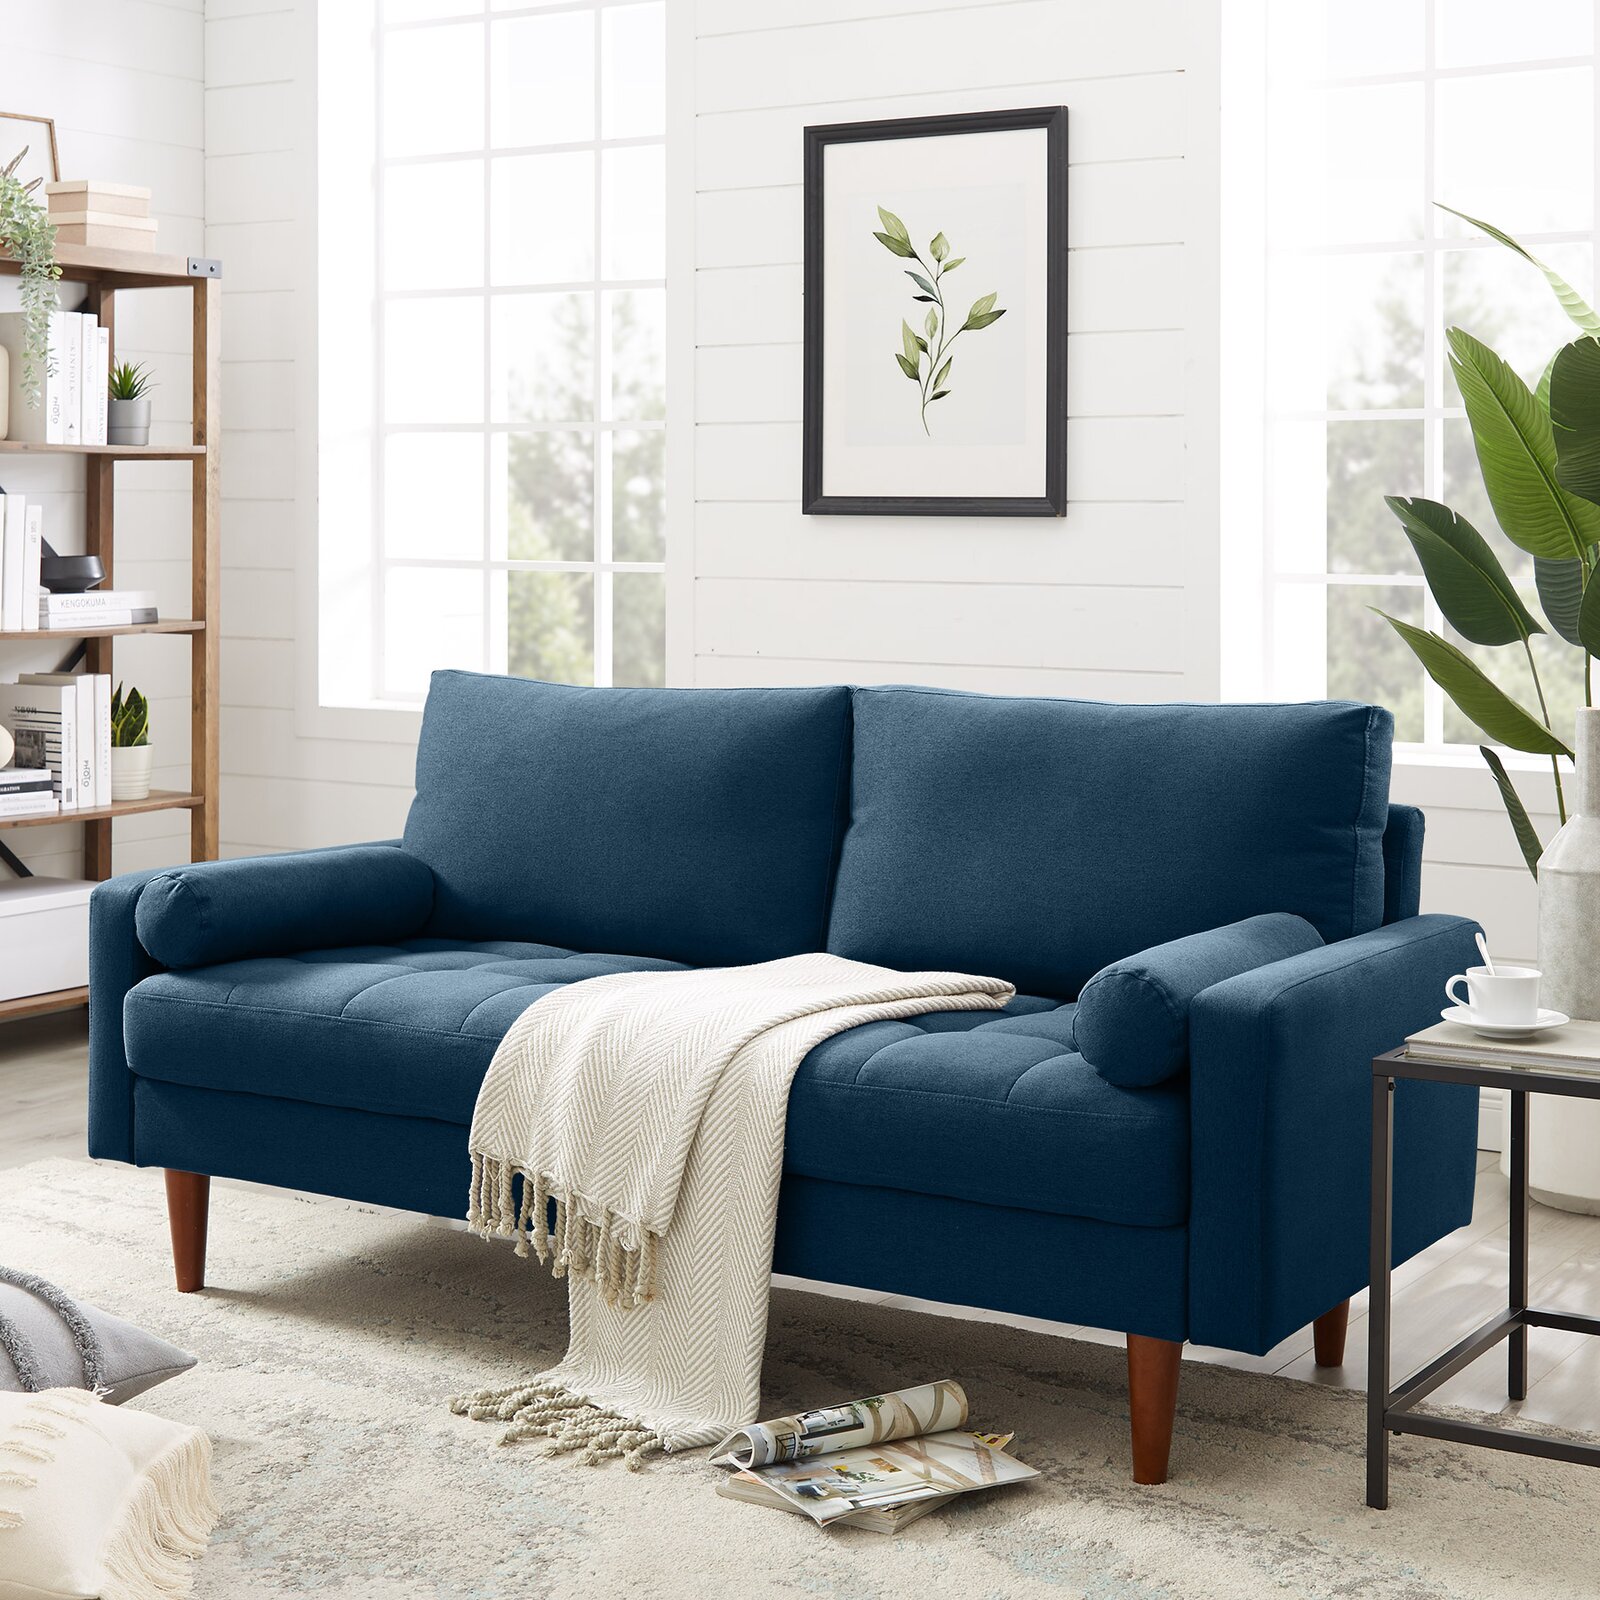 Civiel Ordelijk verloving 25 Latest Sofa Designs & Trends - Décor Aid